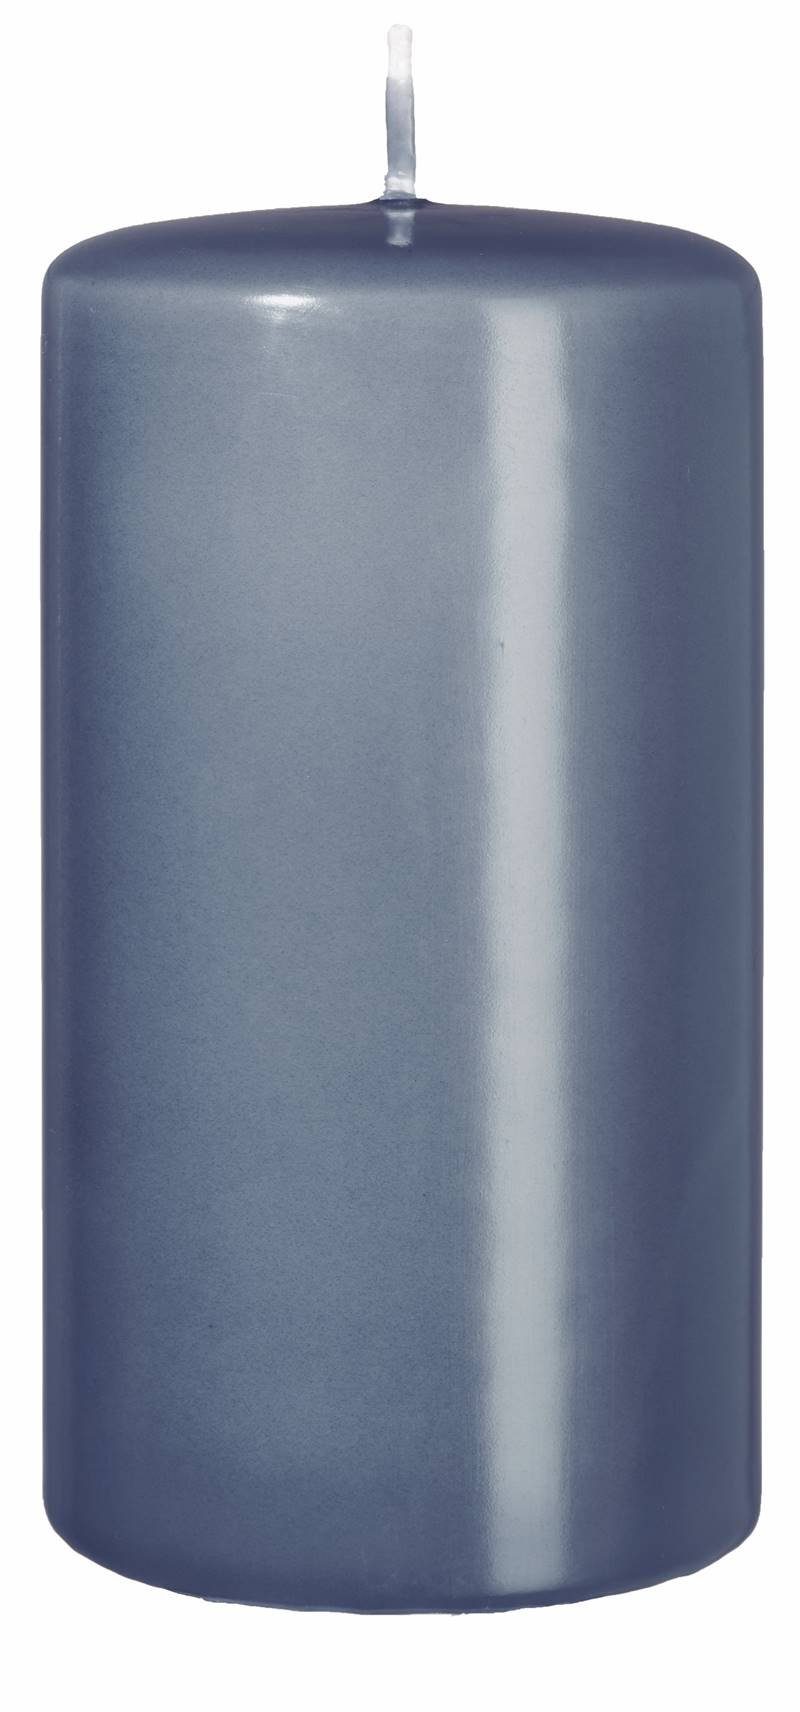 Kopschitz Kerzen Stumpenkerze Flachkopf-Stumpenkerzen Pacific Blau Grau 120 x Ø 60 mm, 4 Stück